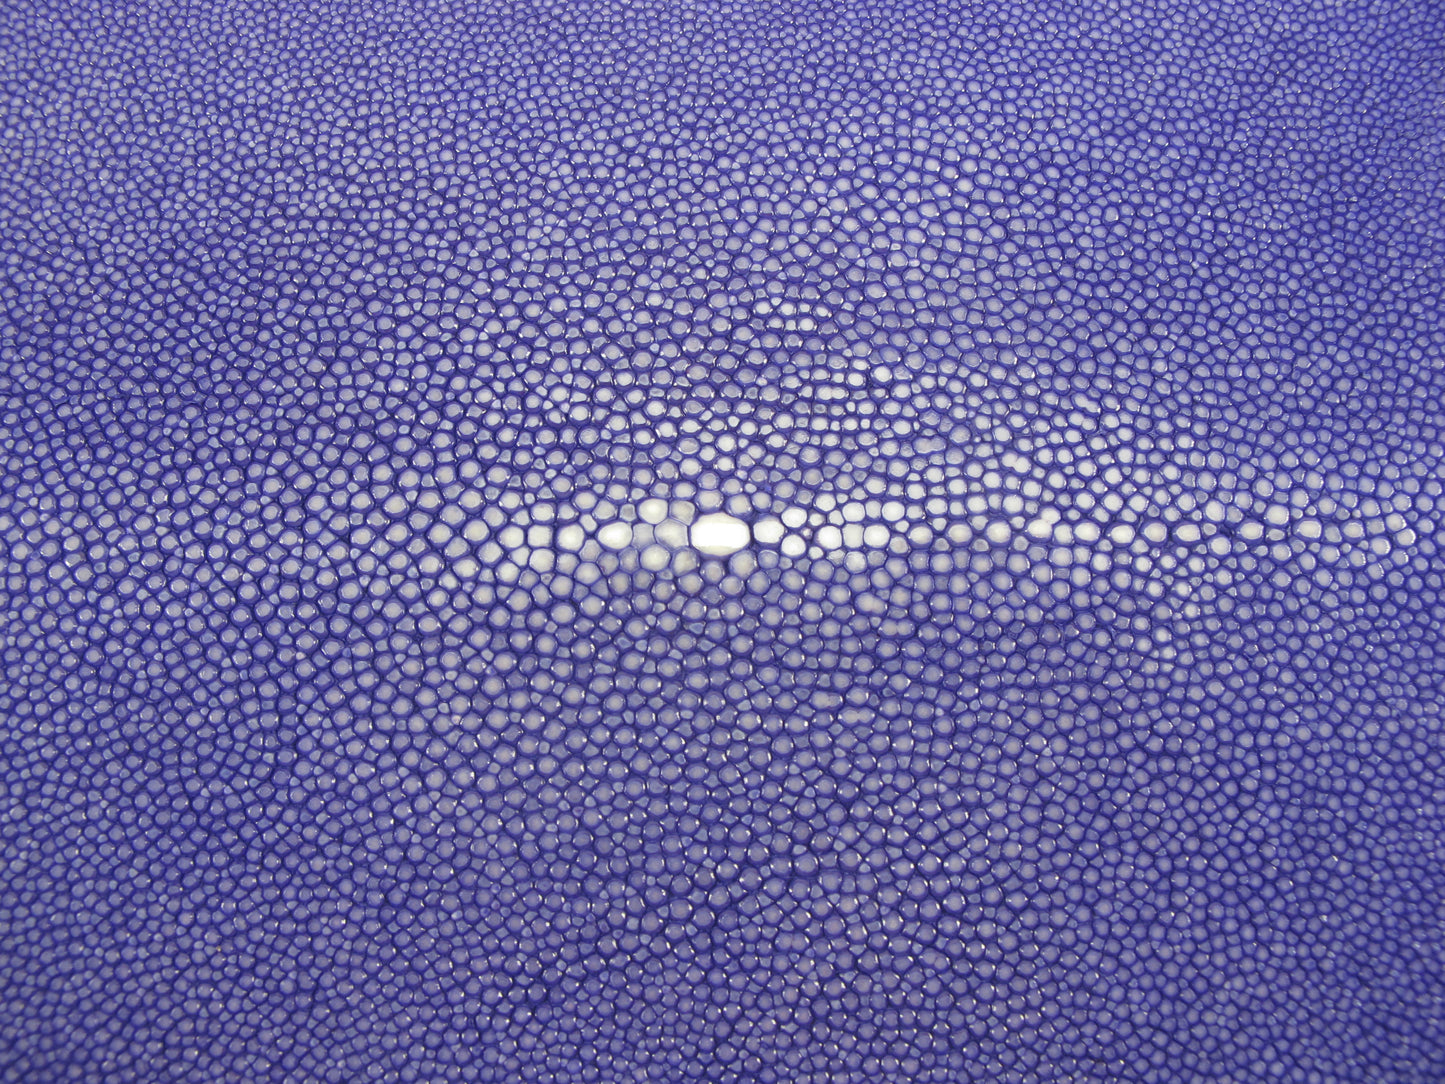 Genuine Polished Stingray Skin Leather Hide Pelt Long Shape Purple